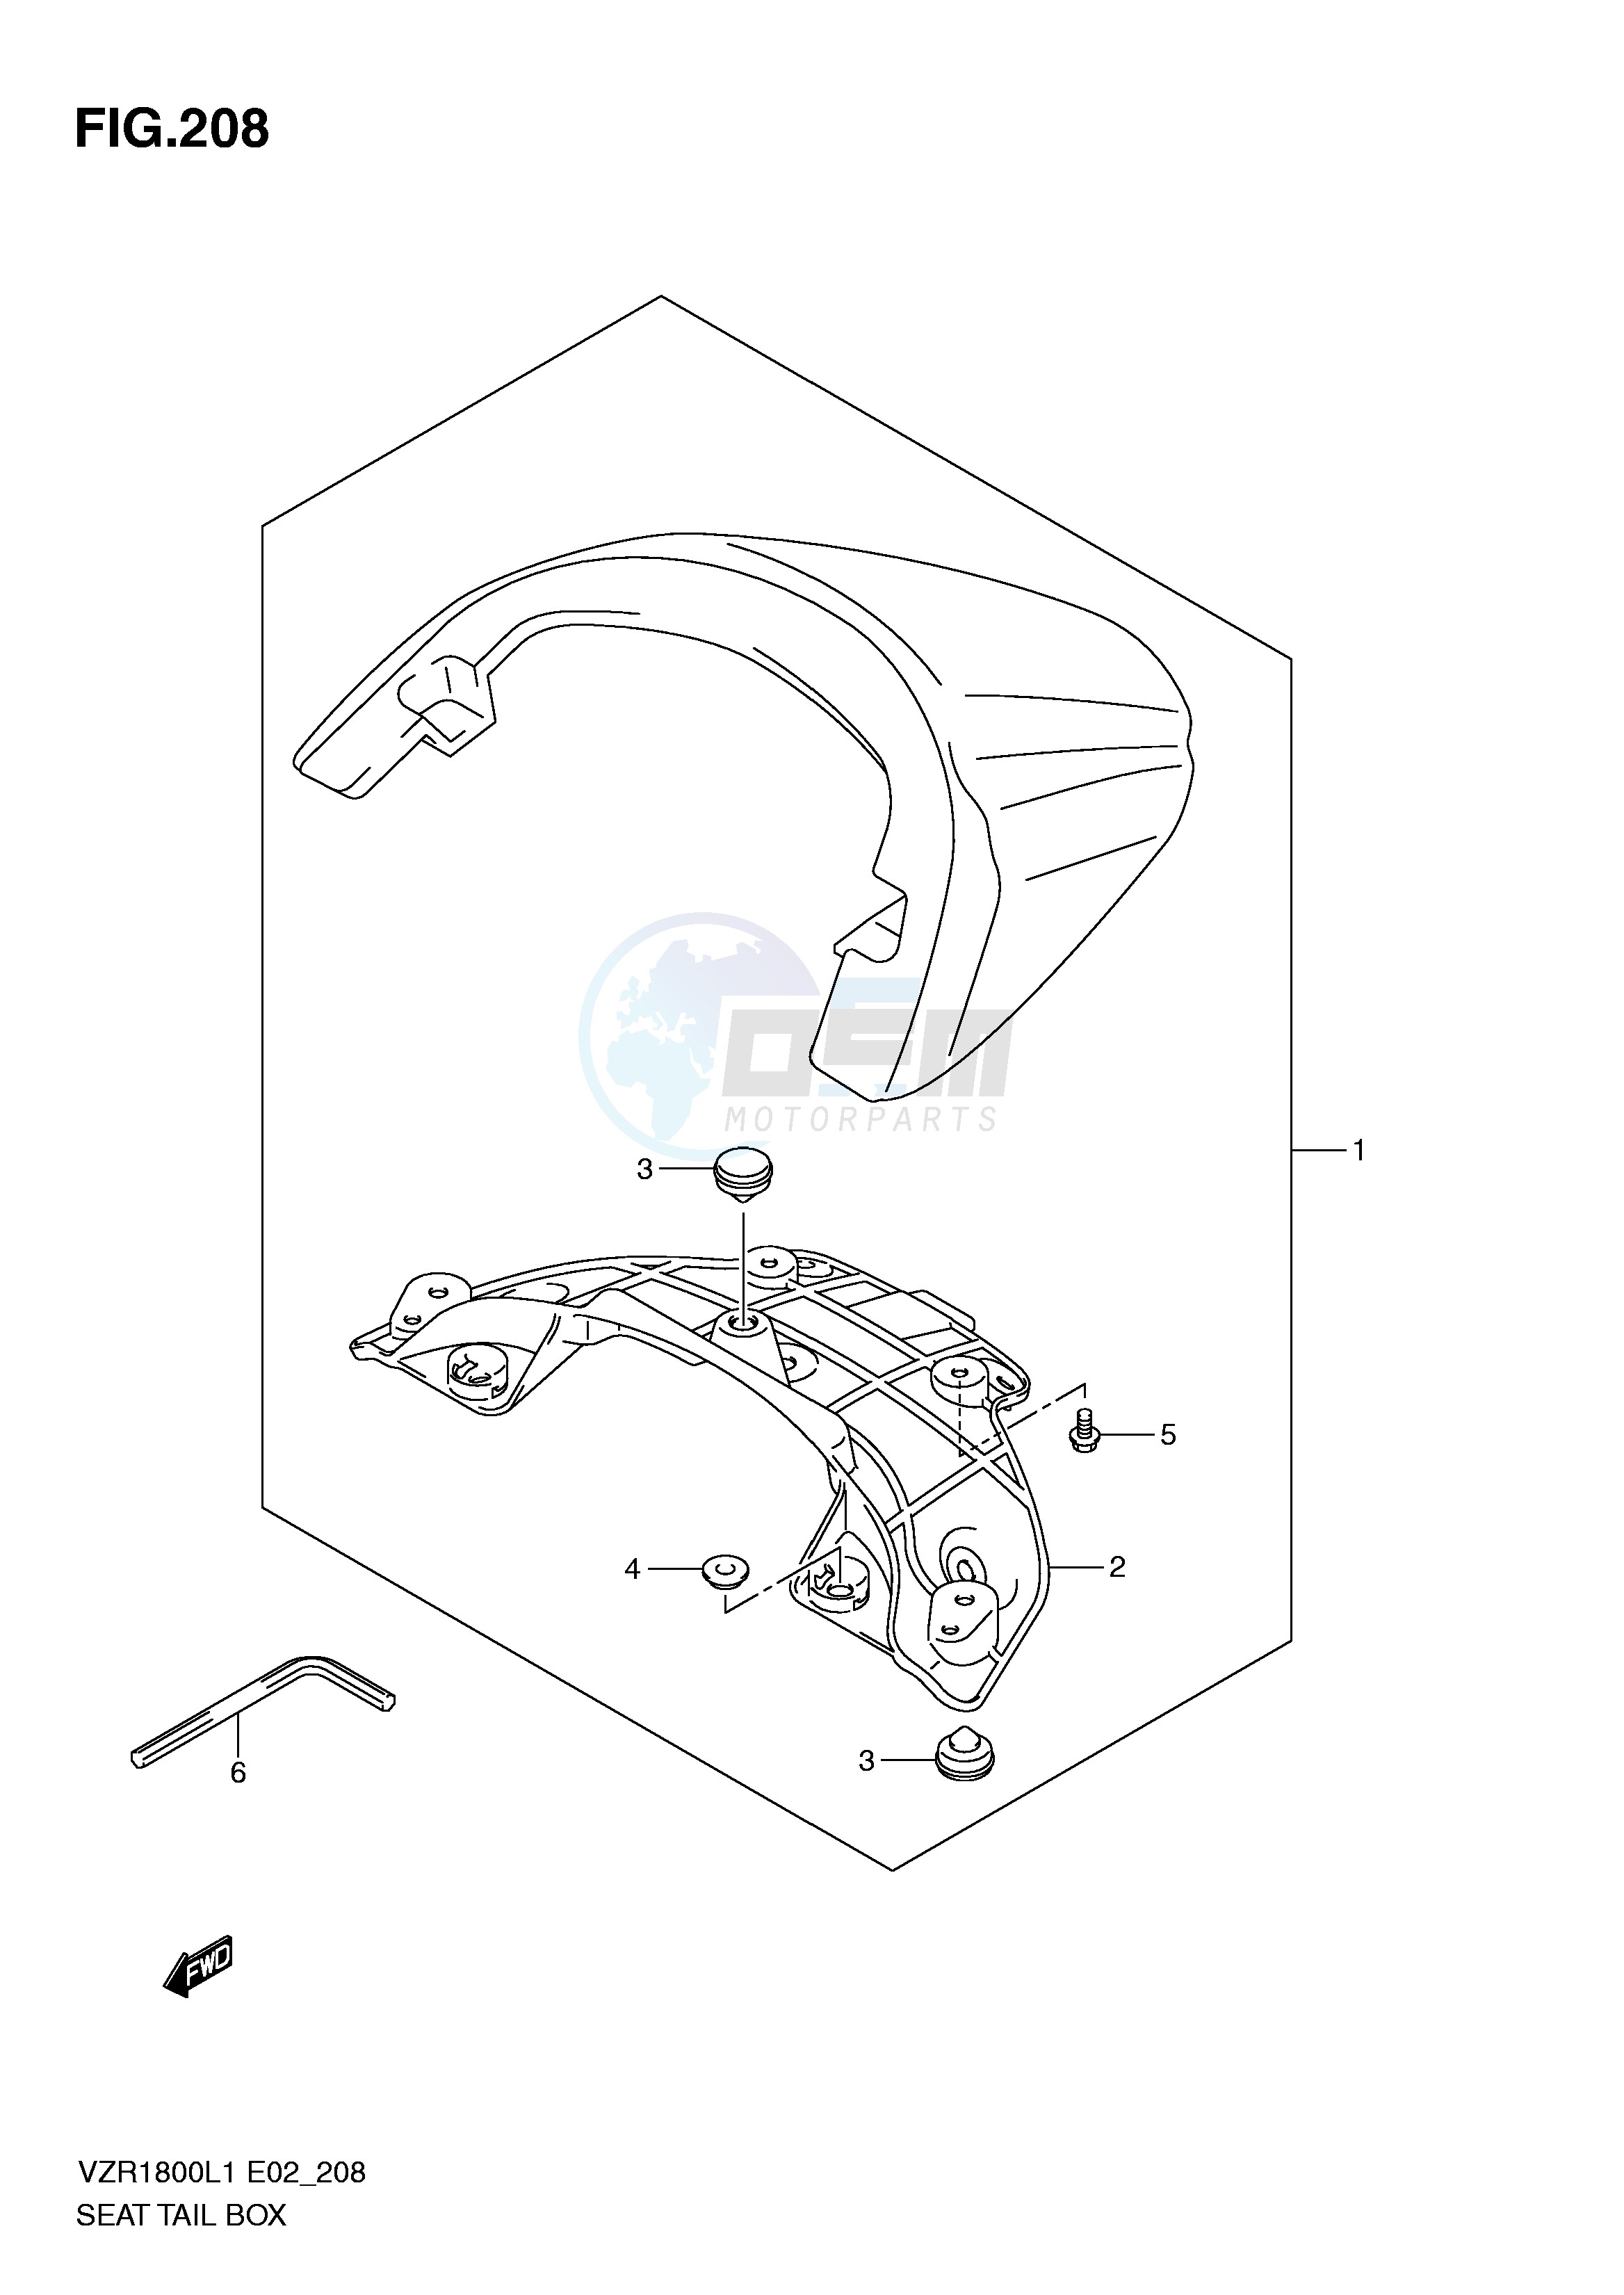 SEAT TAIL BOX (VZR1800UFL1 E19) blueprint